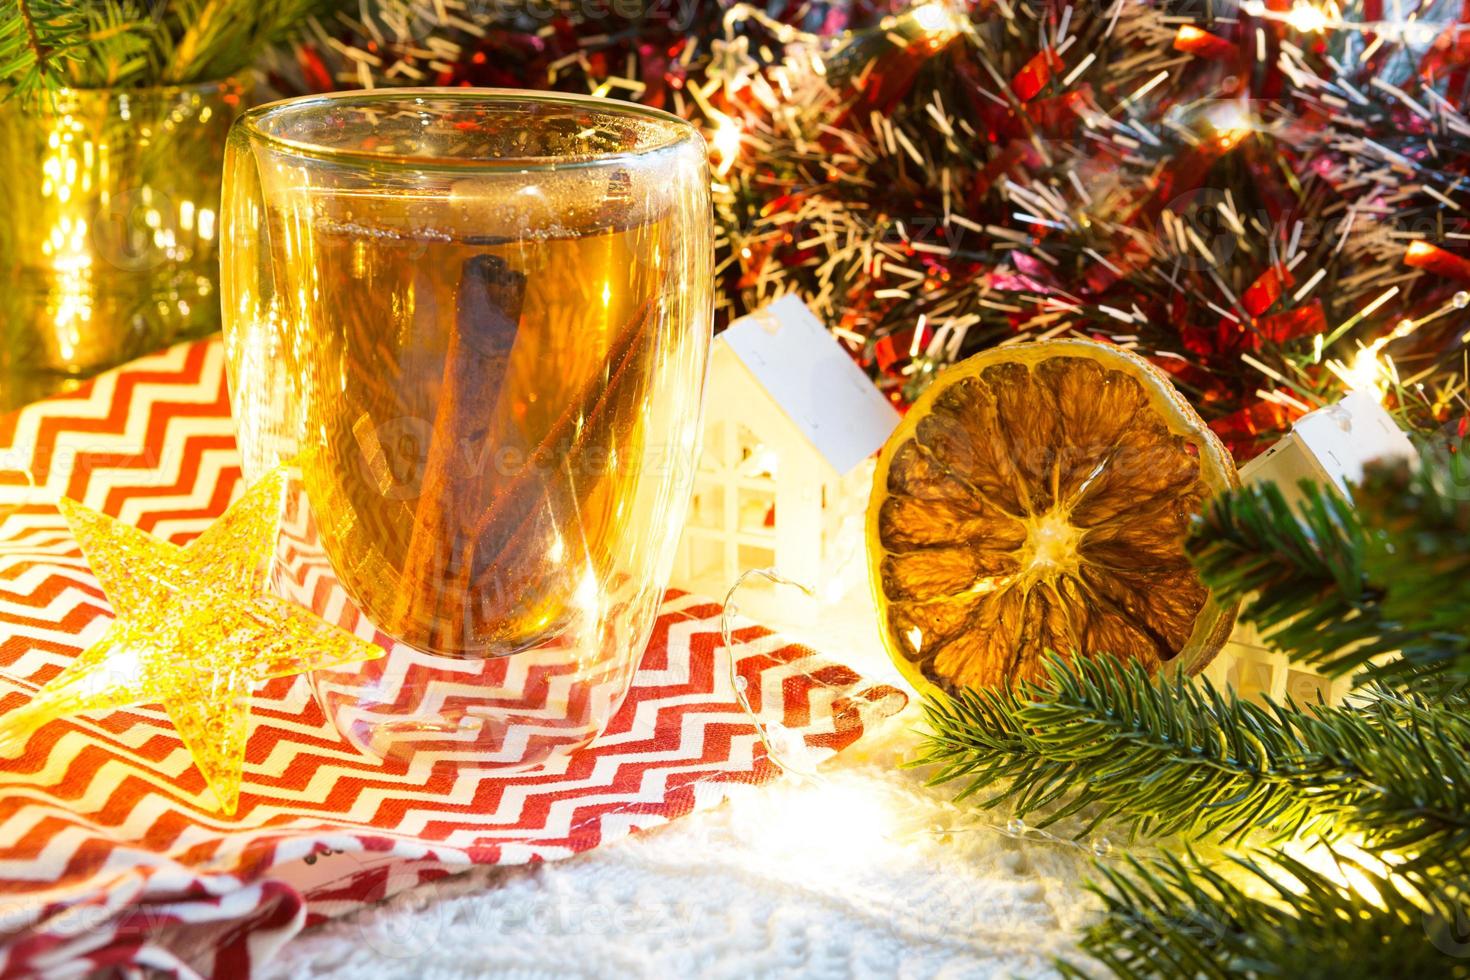 transparant dubbelwandig glas tuimelaar met heet thee en kaneel stokjes Aan de tafel met Kerstmis decor en klein huis. nieuw jaar atmosfeer, plak van droog oranje, guirlande, net tak, knus foto